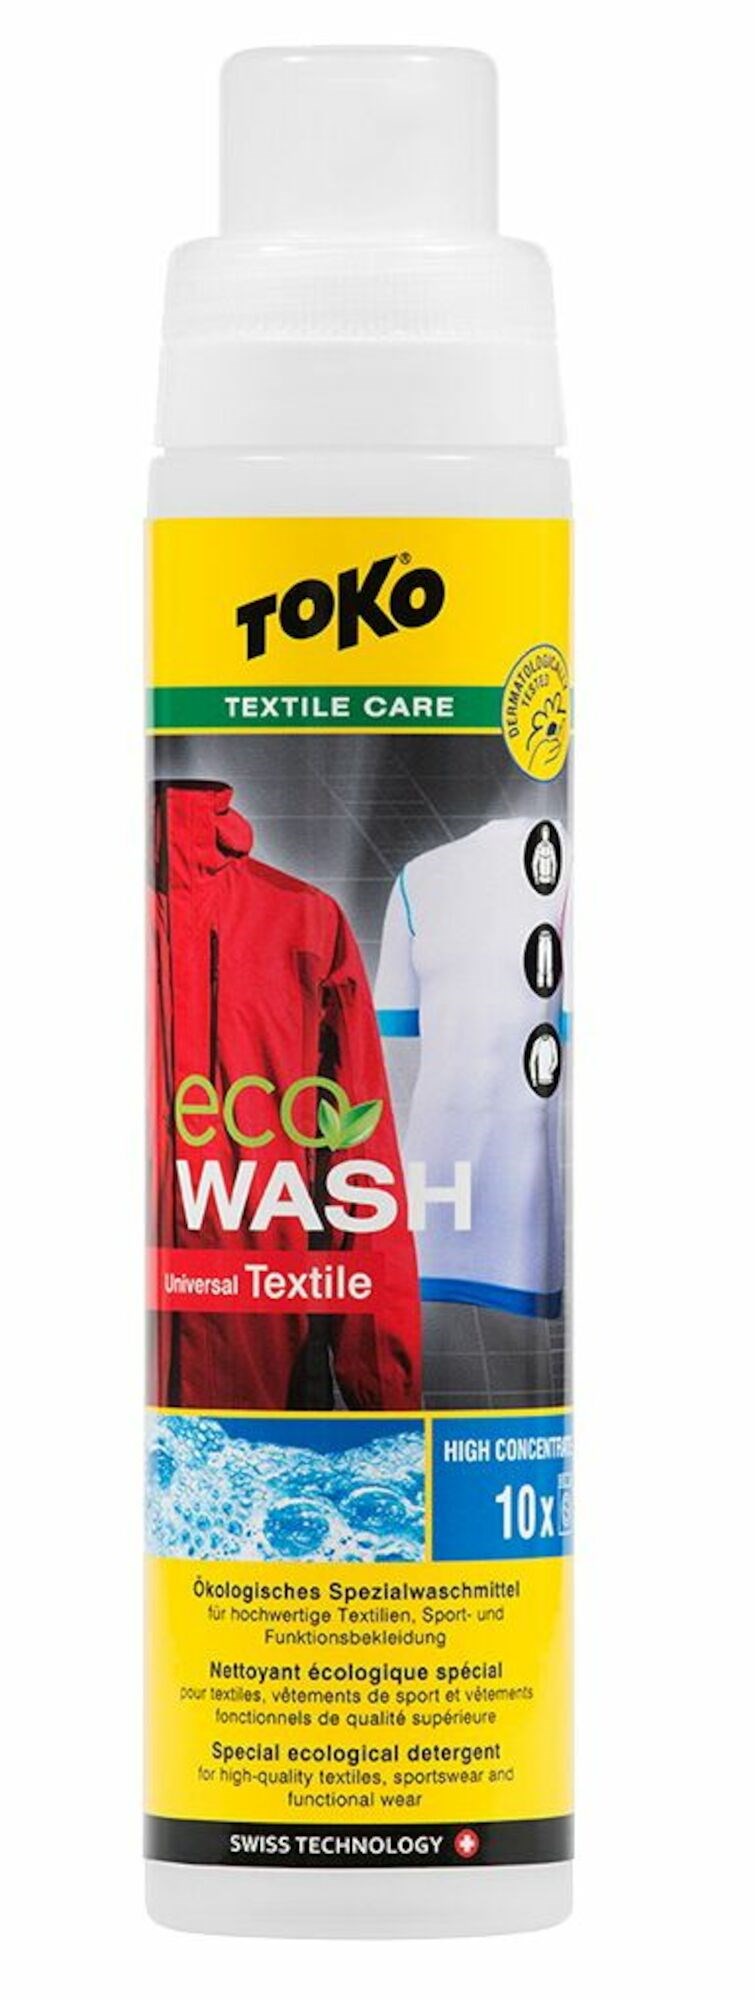 TOKO Textile Wash